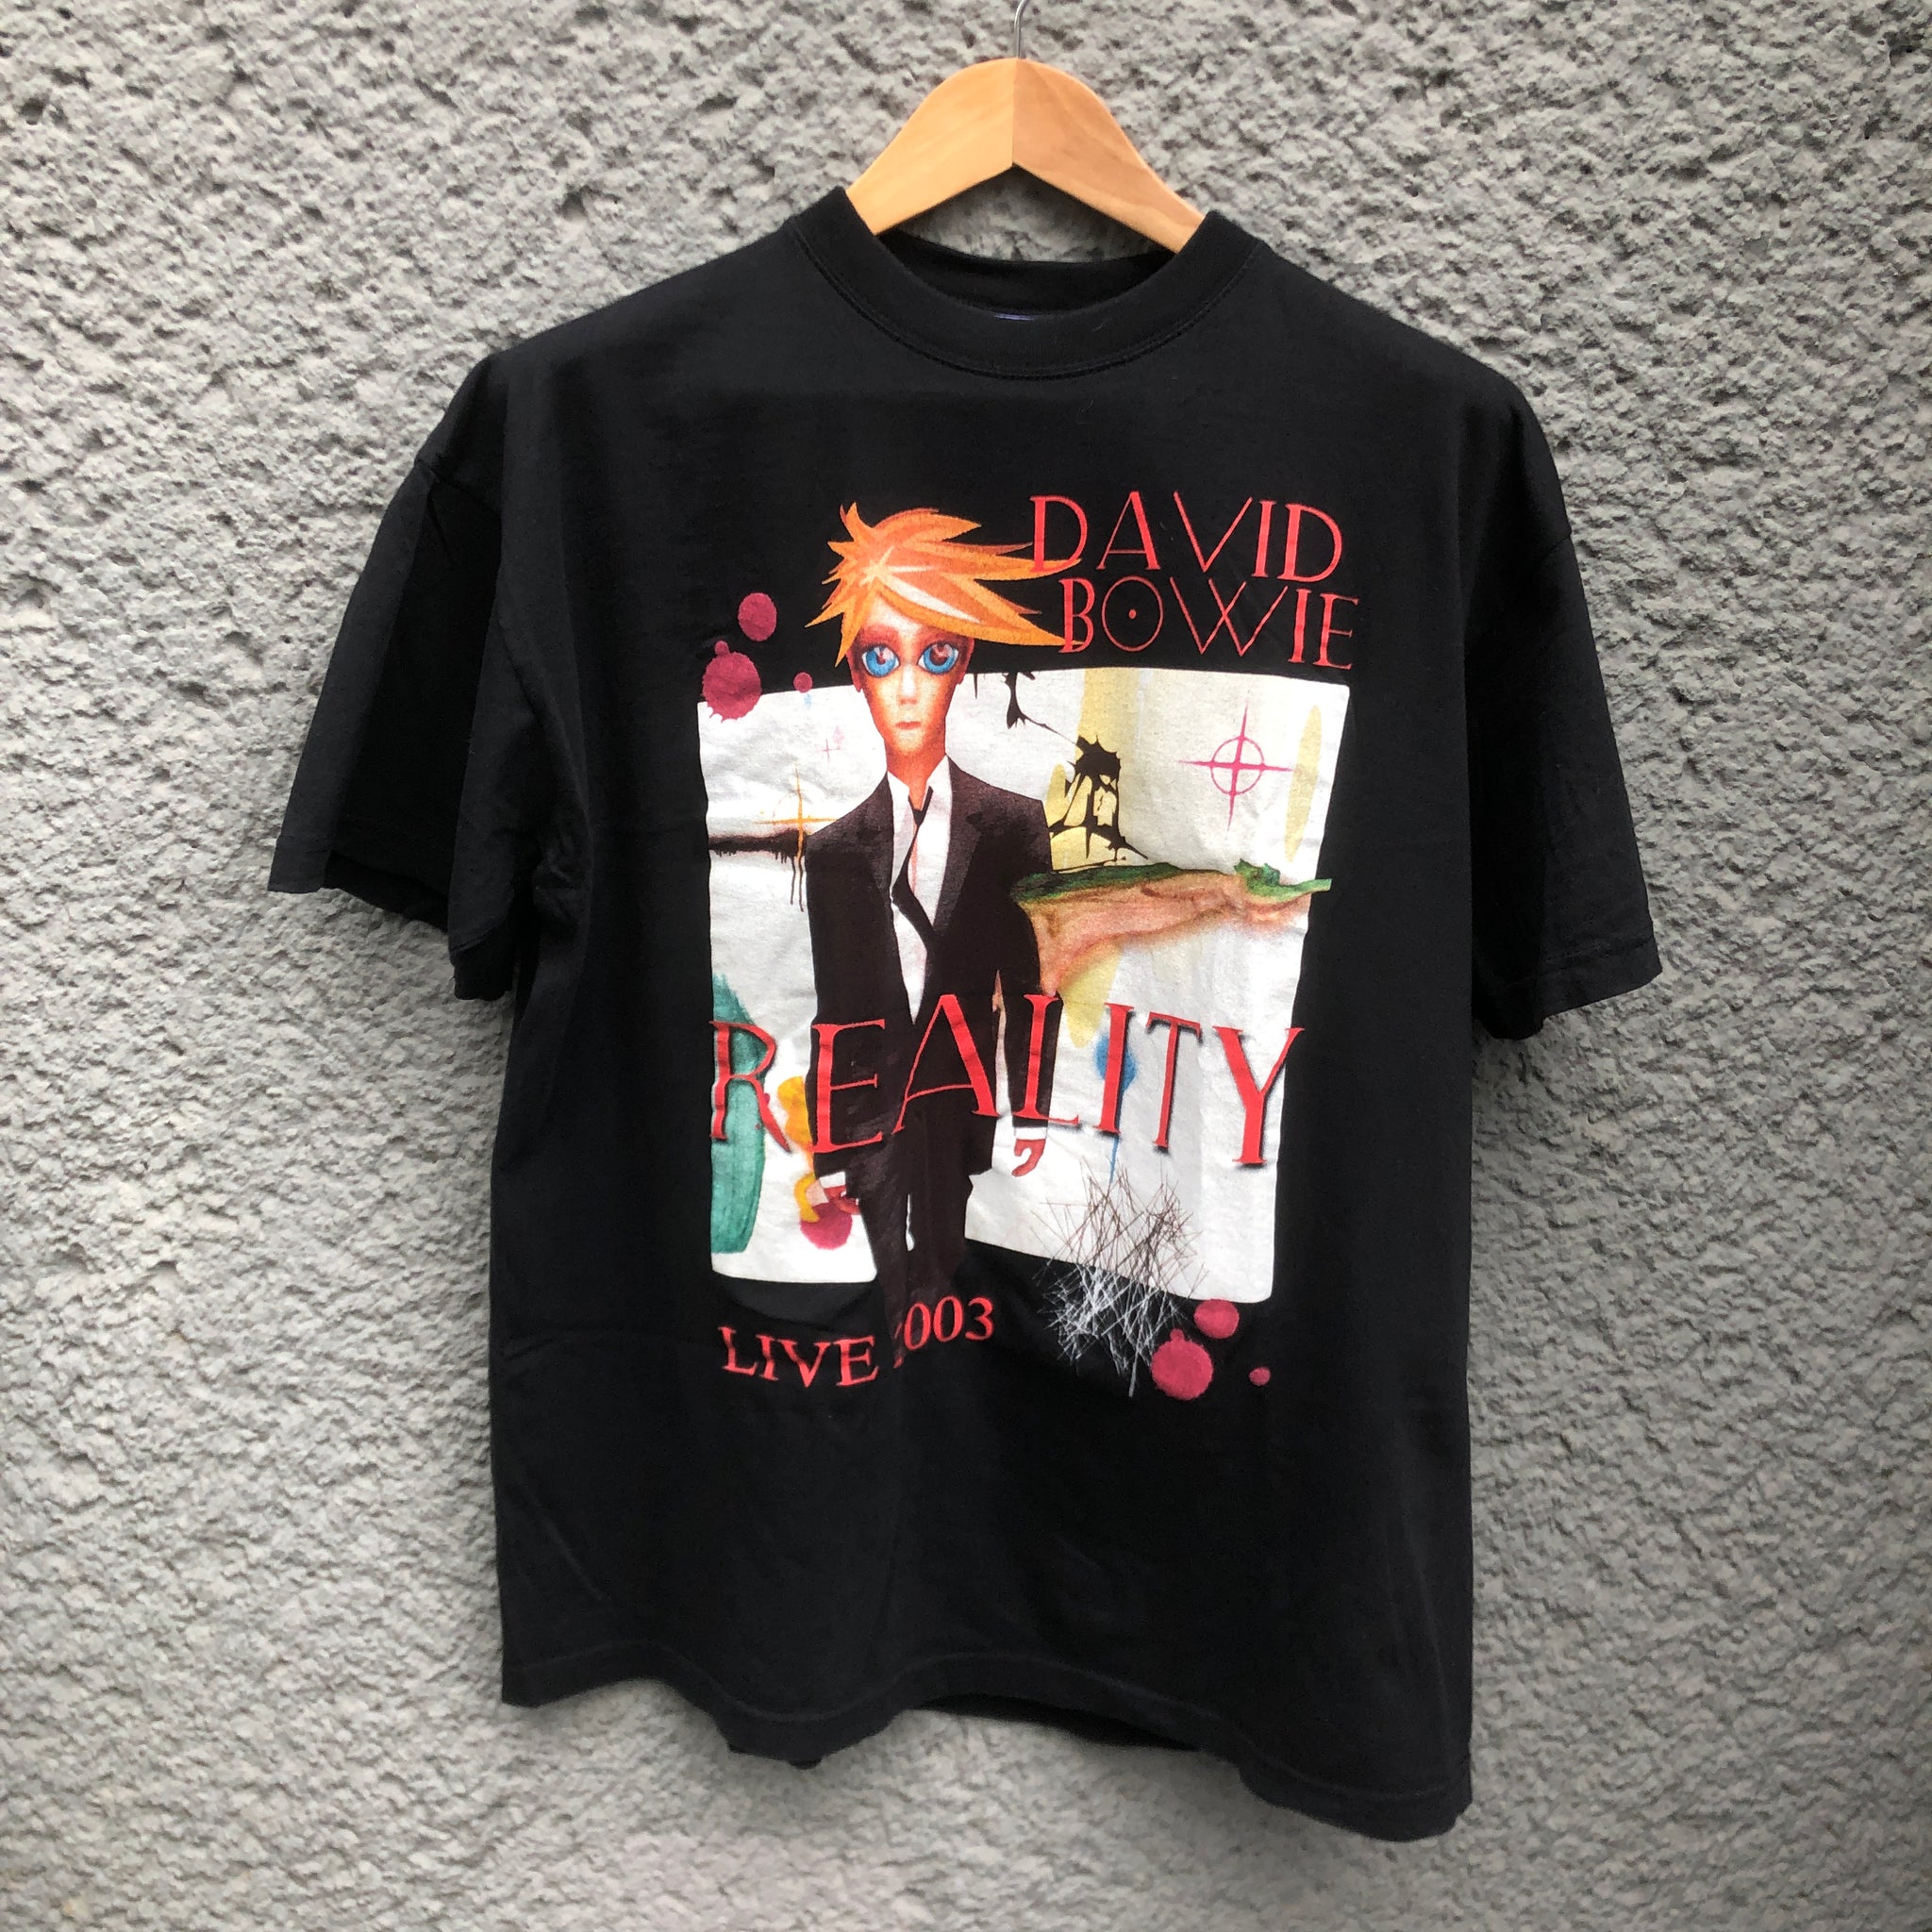 Vintage Black David Bowie "Reality" T-Shirt 2003 Tee